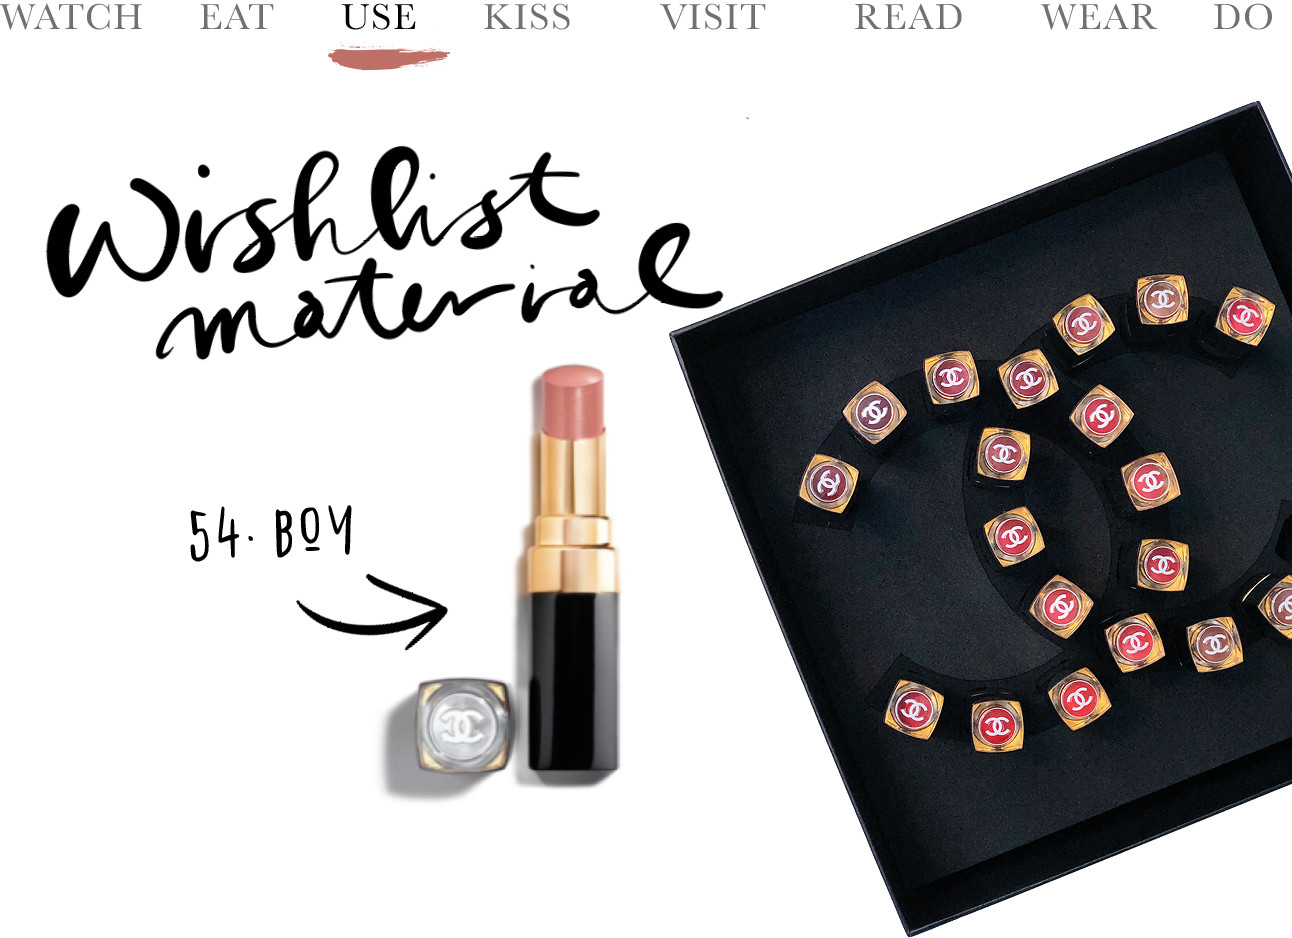 chanel box lipsticks pr pakket, nummer 54 boy is favoriet, wishlist material today we use